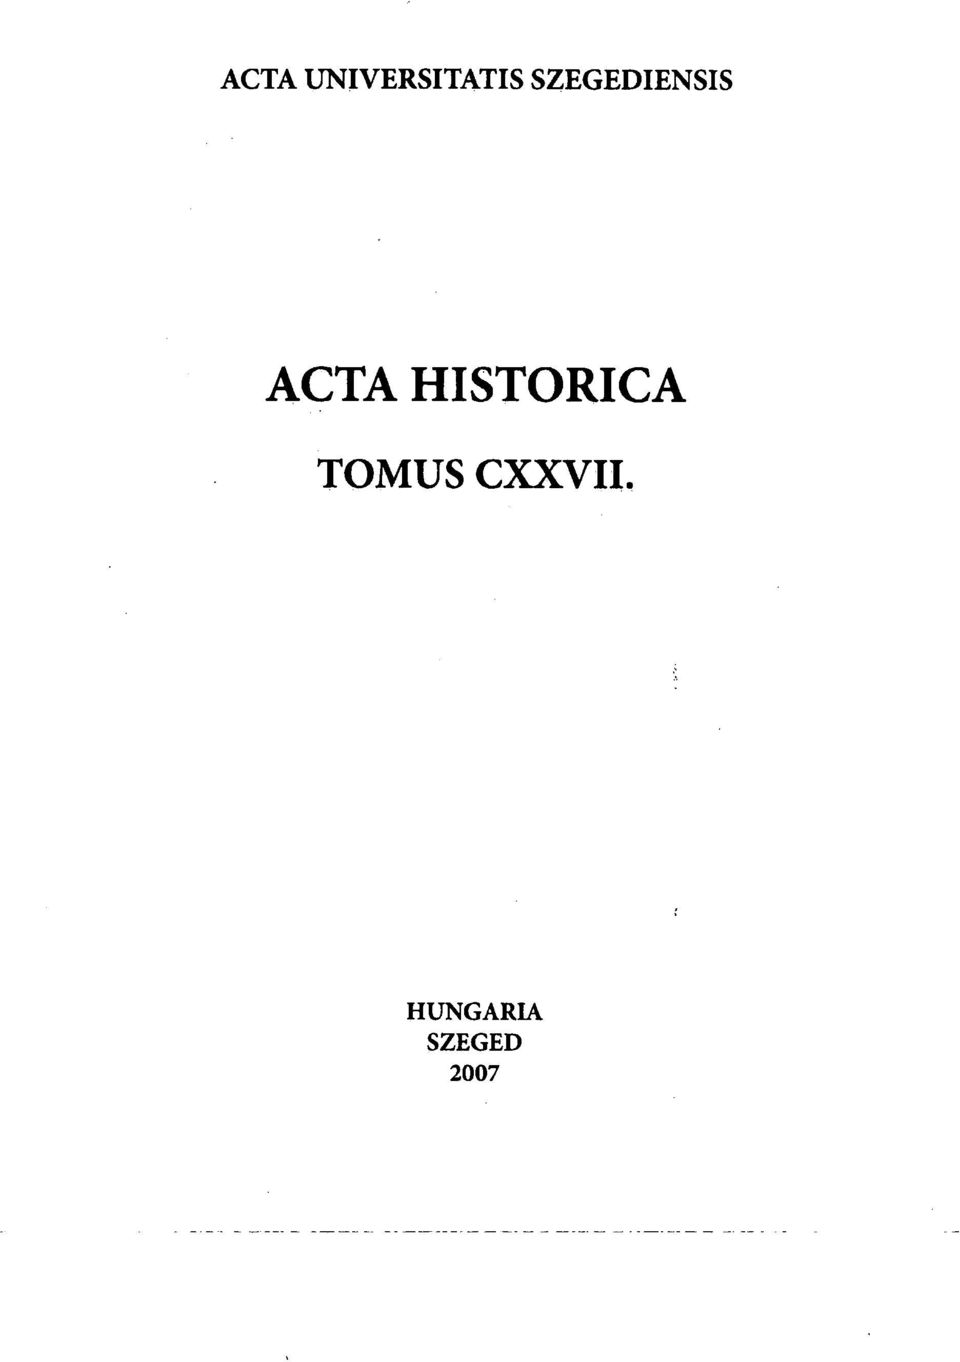 HISTORICA TOMUS